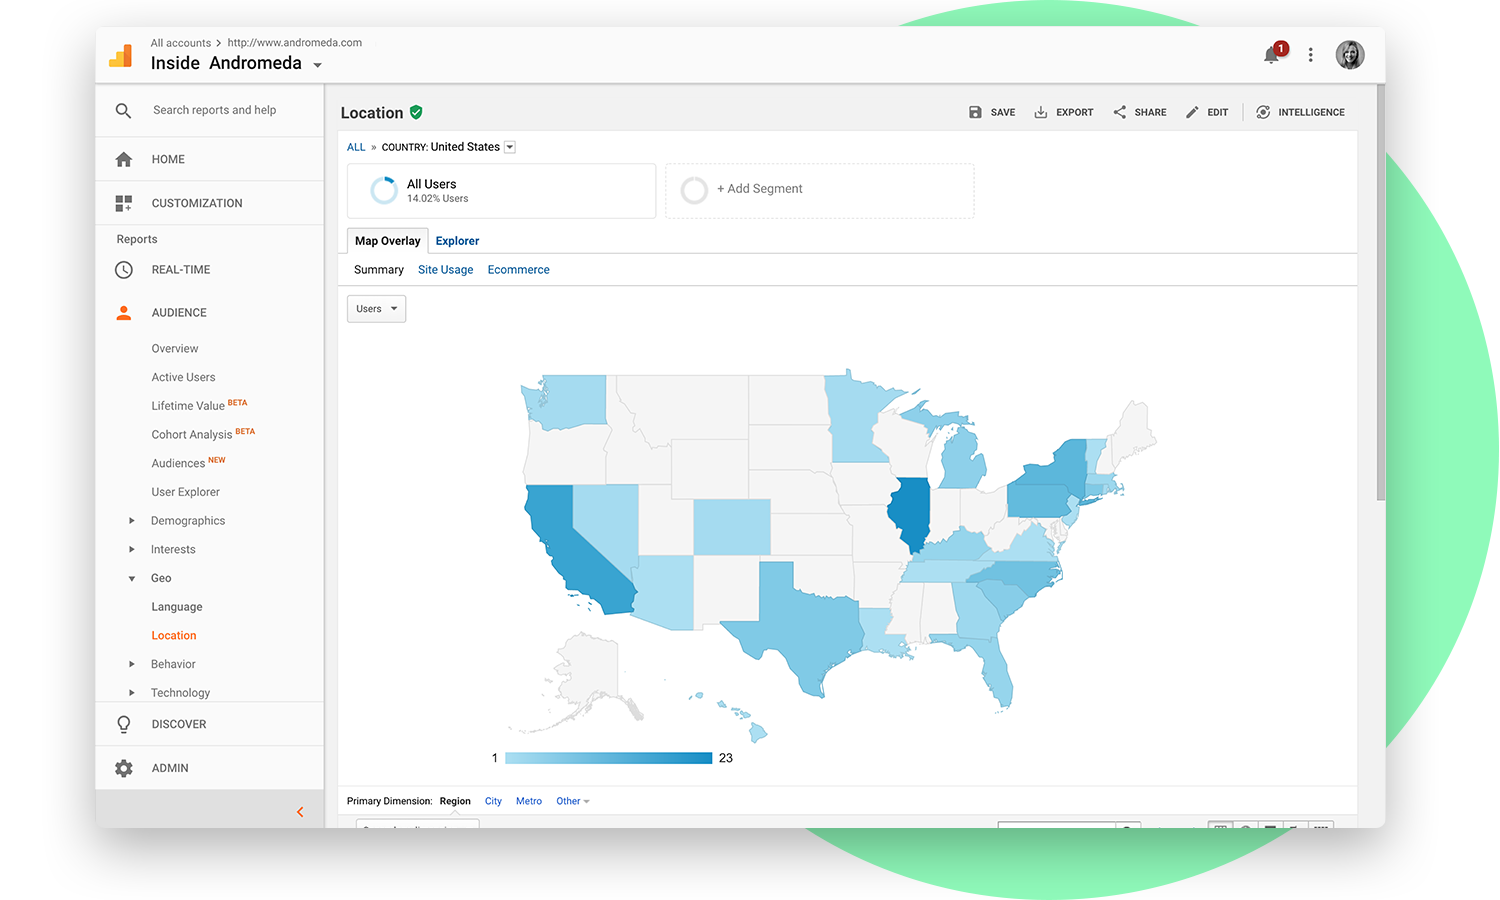 Google Analytics map of the US